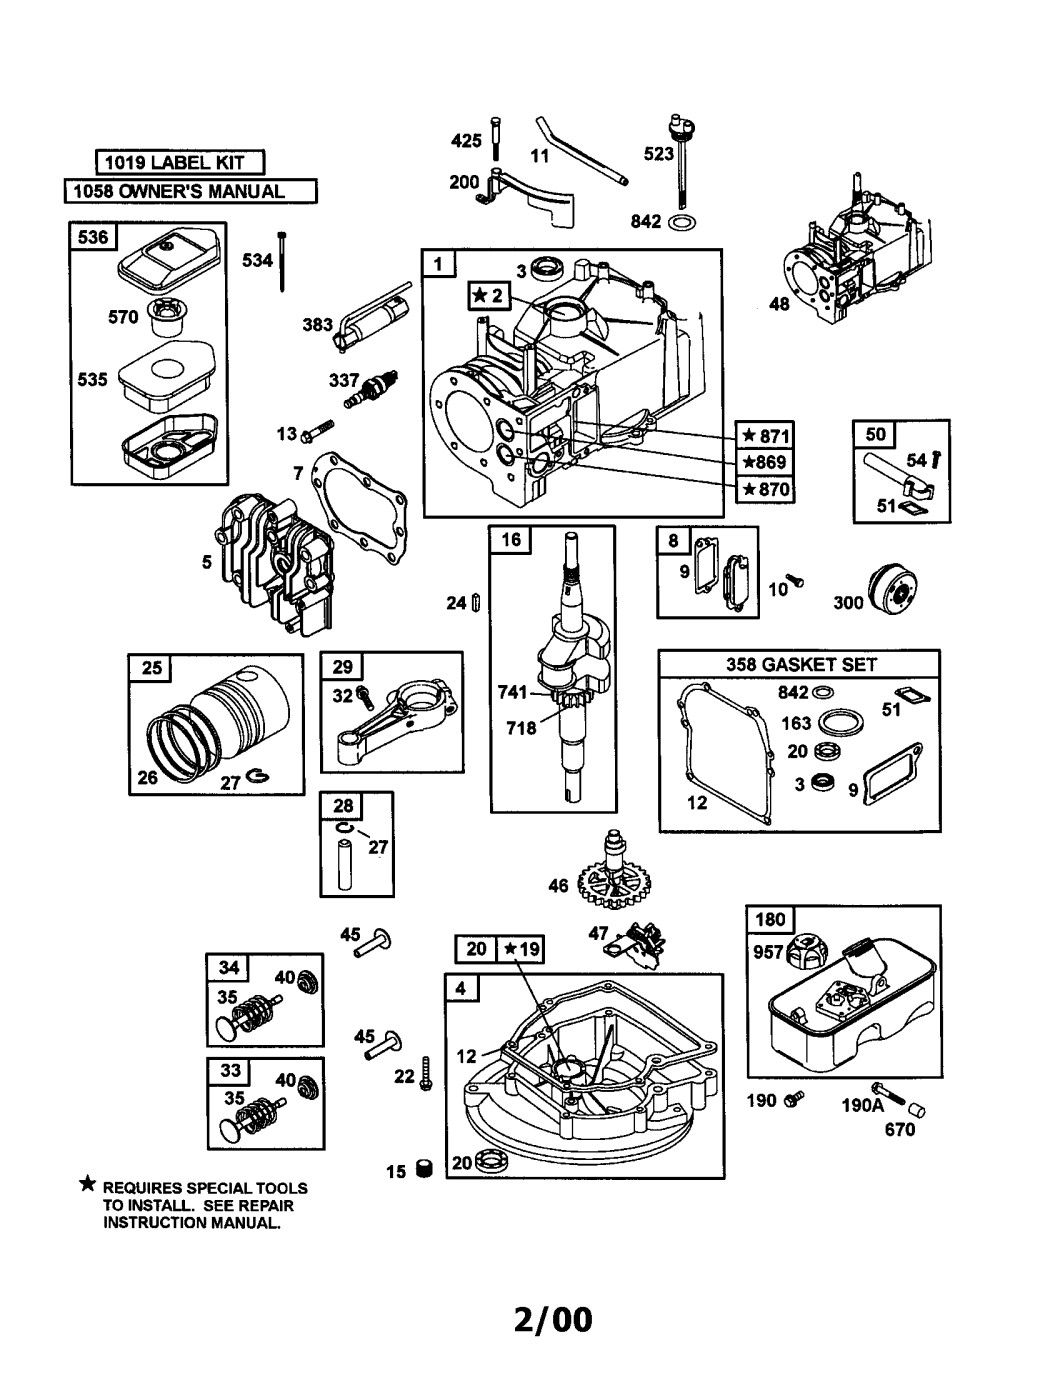 Briggs Stratton Spare Parts Manual